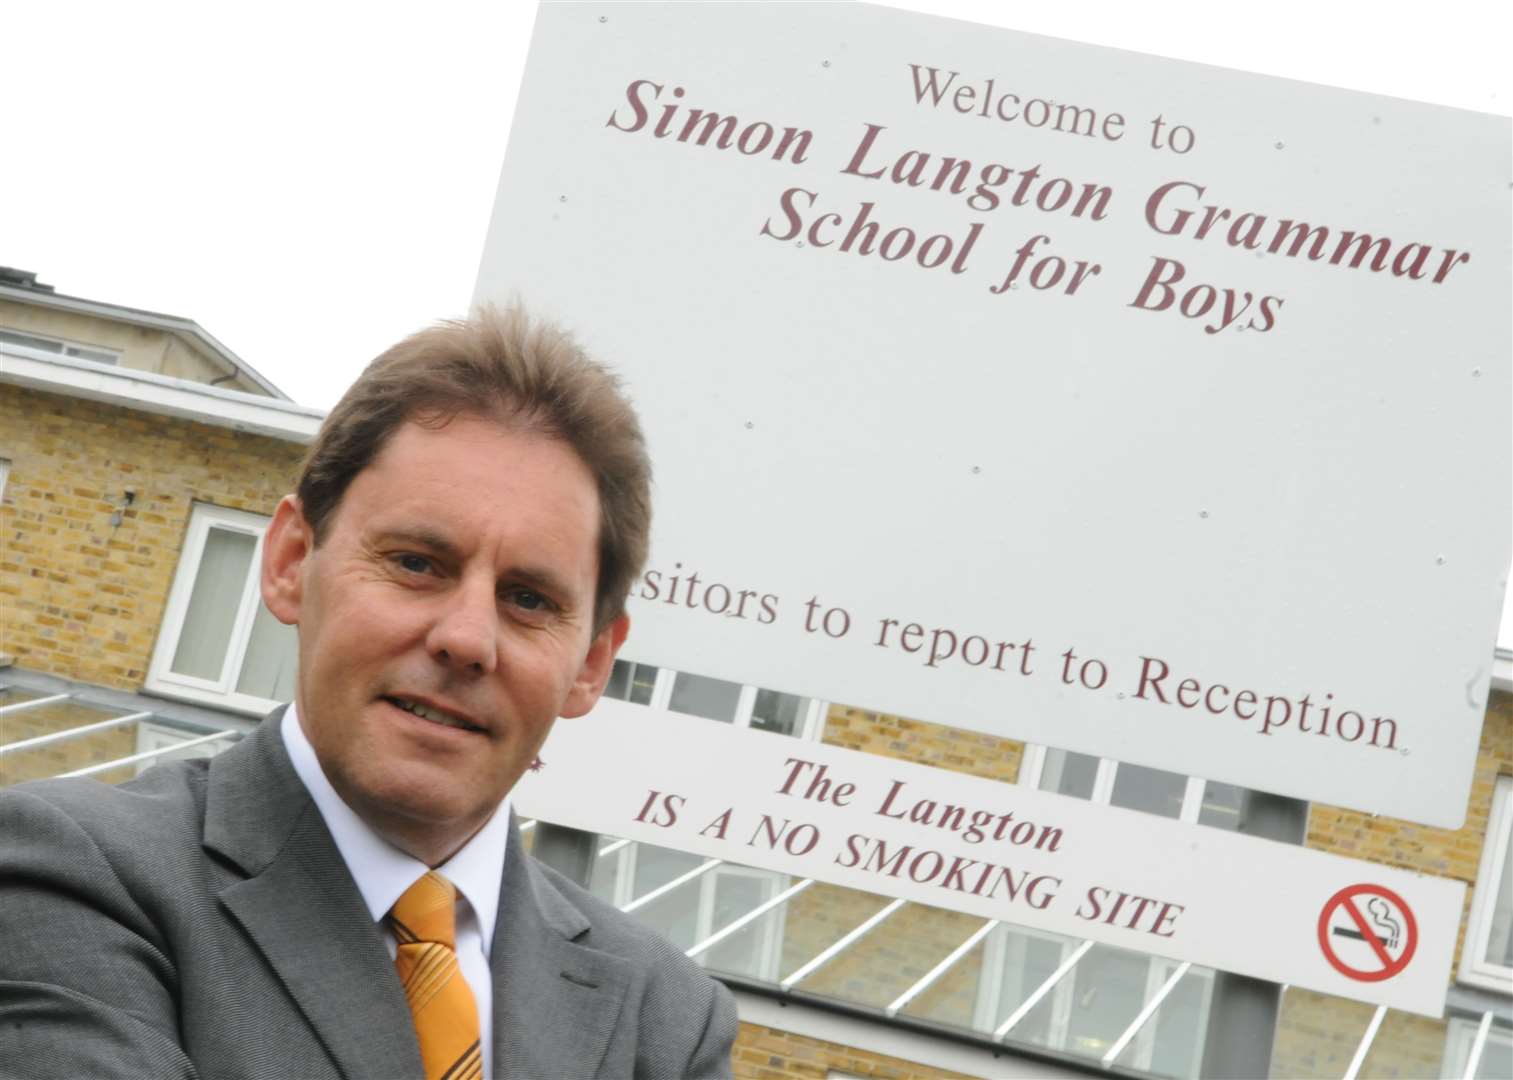 Ken Moffat, the head teacher at Simon Langton Grammar School for Boys